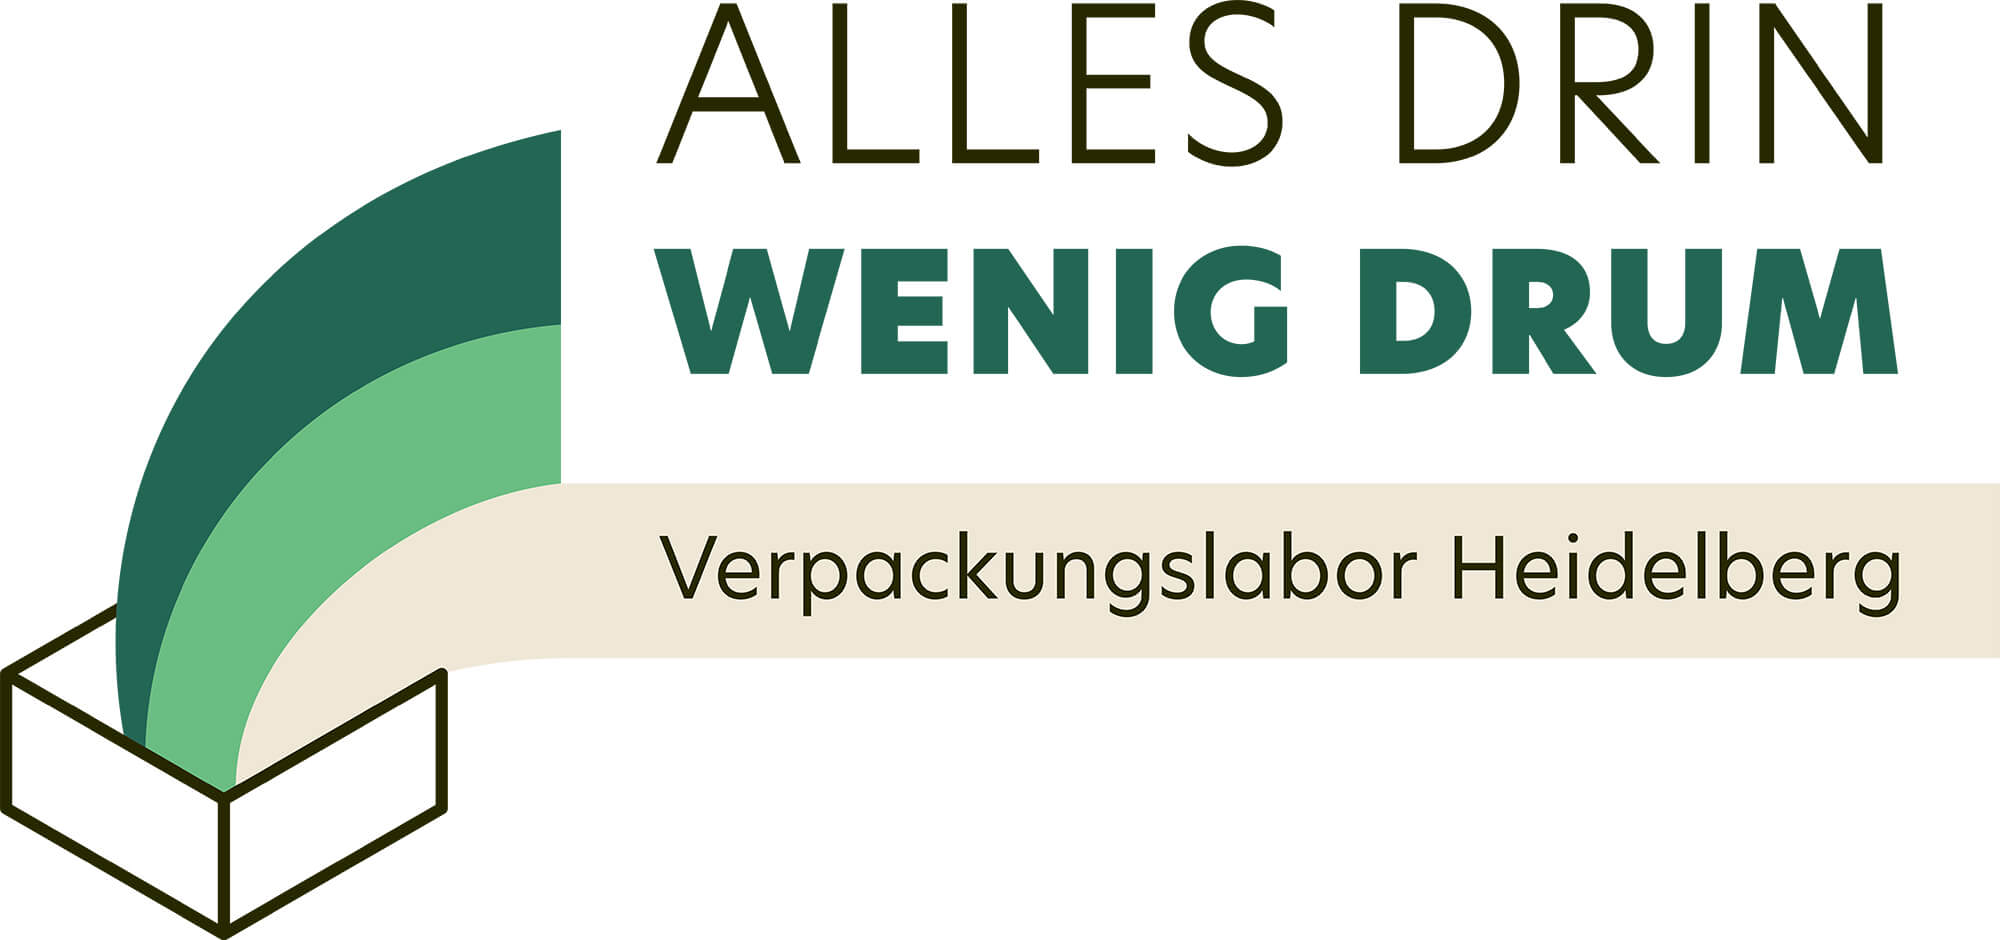 Logo Alles drin wenig drum | Projekt innoredux, Verpackungslabor Heidelberg | Design Daniela Leitner |